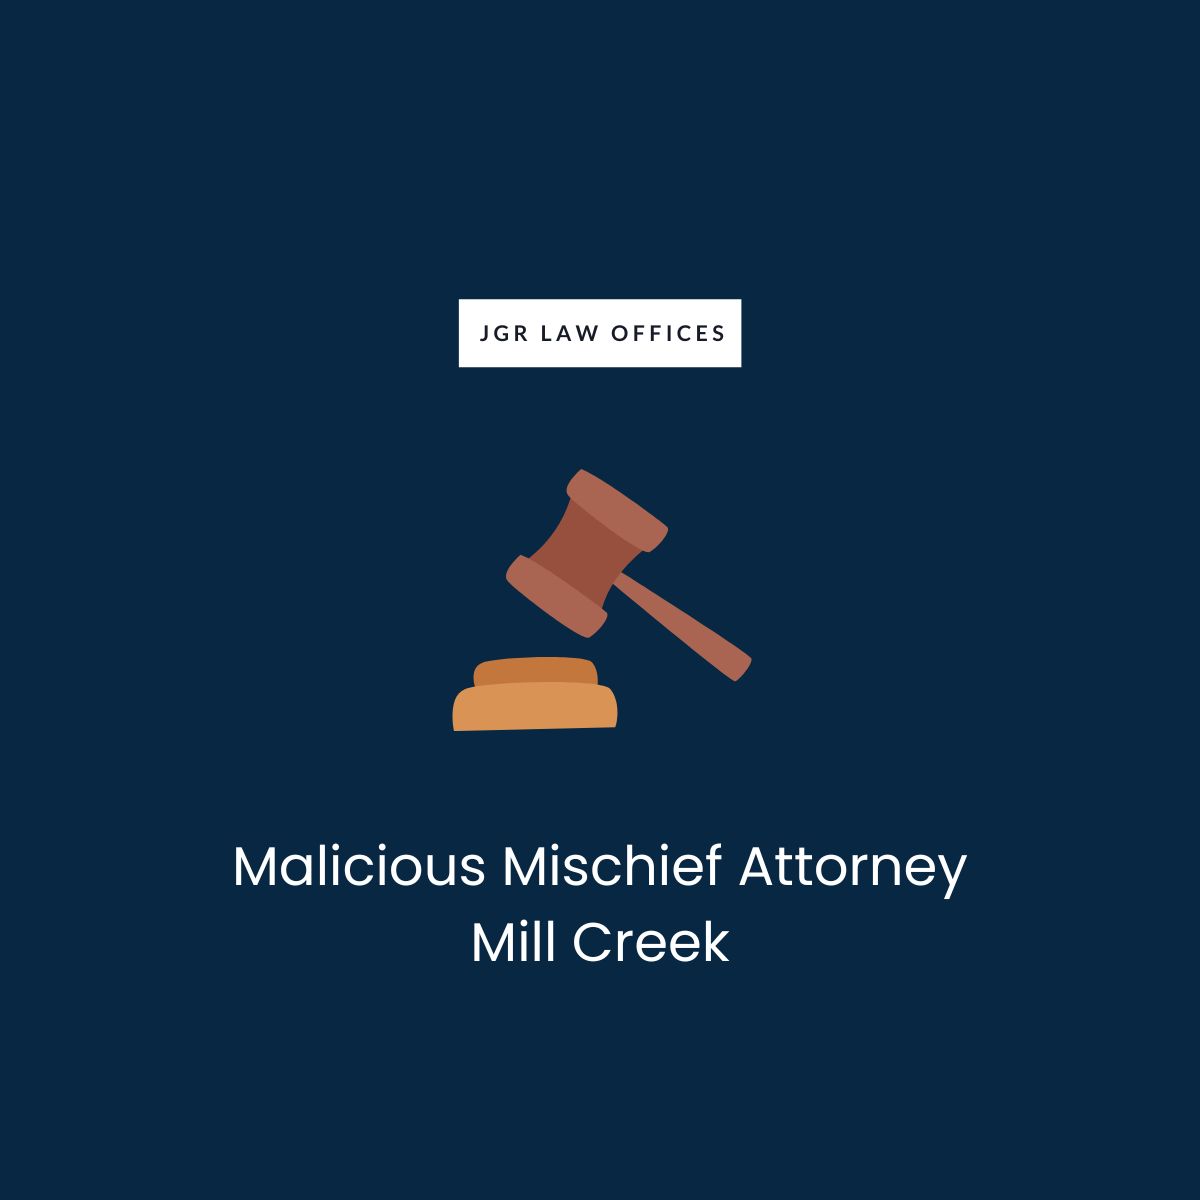 Malicious Mischief Attorney Mill Creek